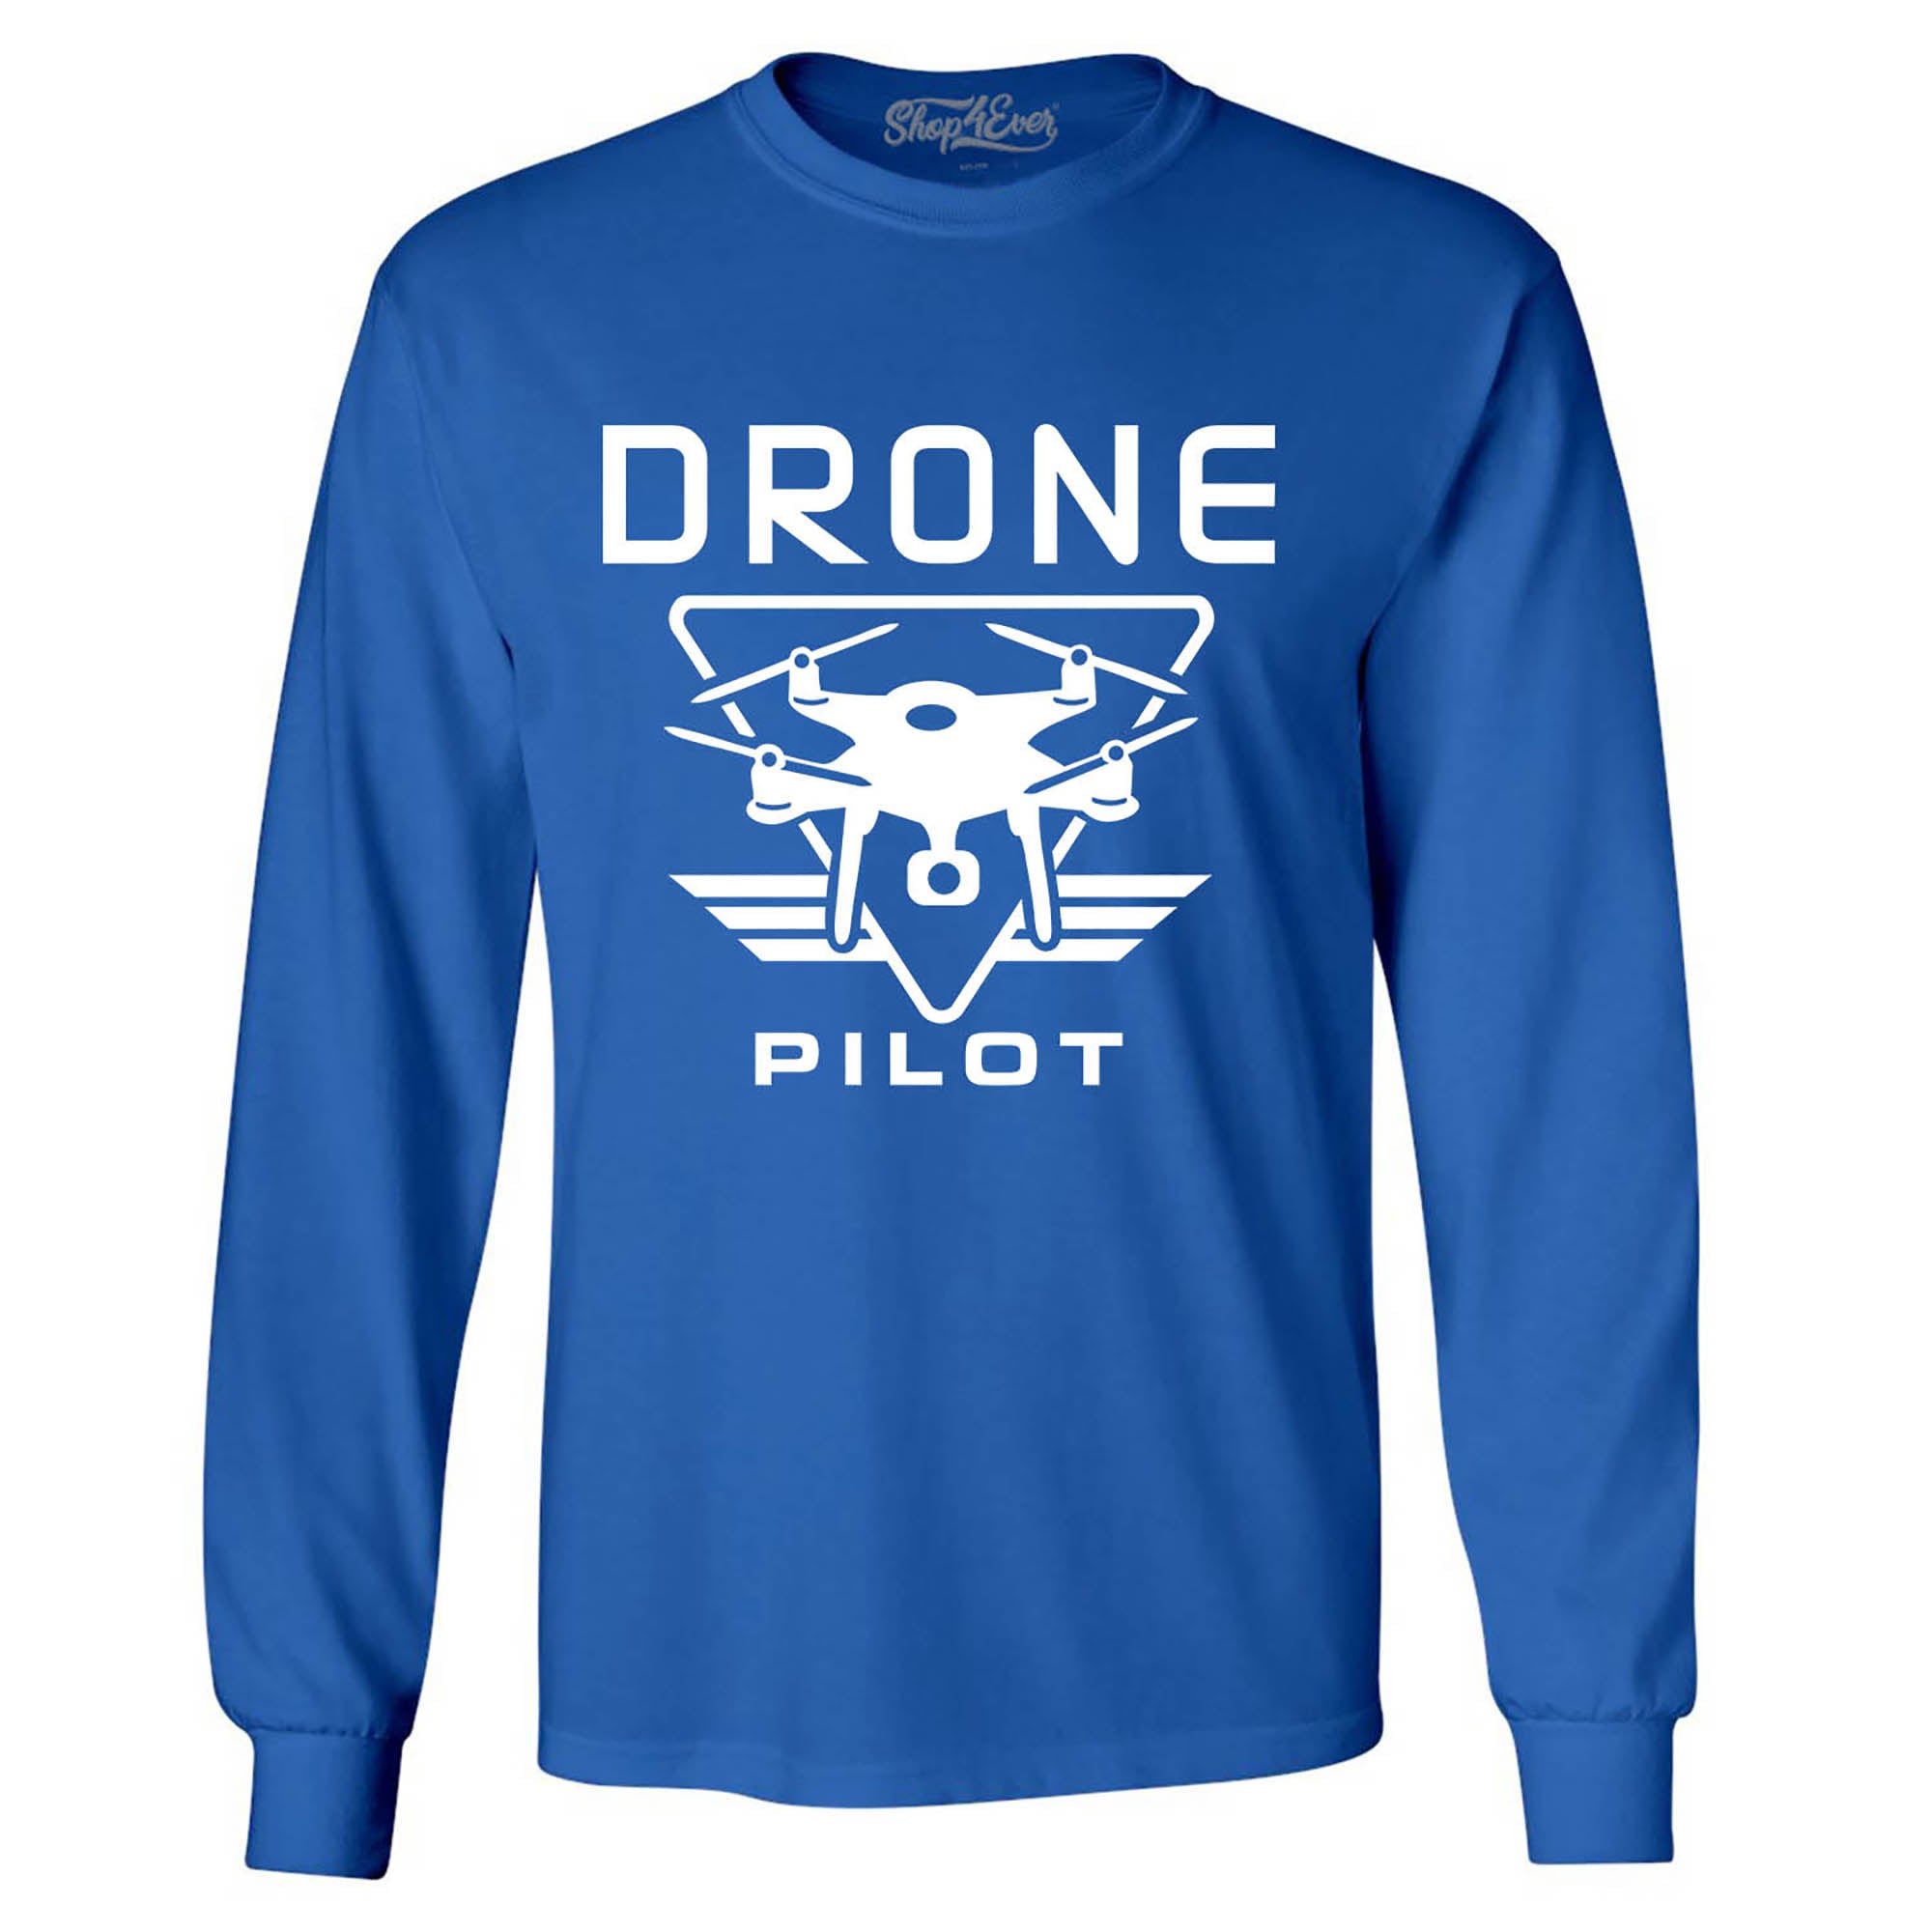 Drone Pilot Long Sleeve Shirt